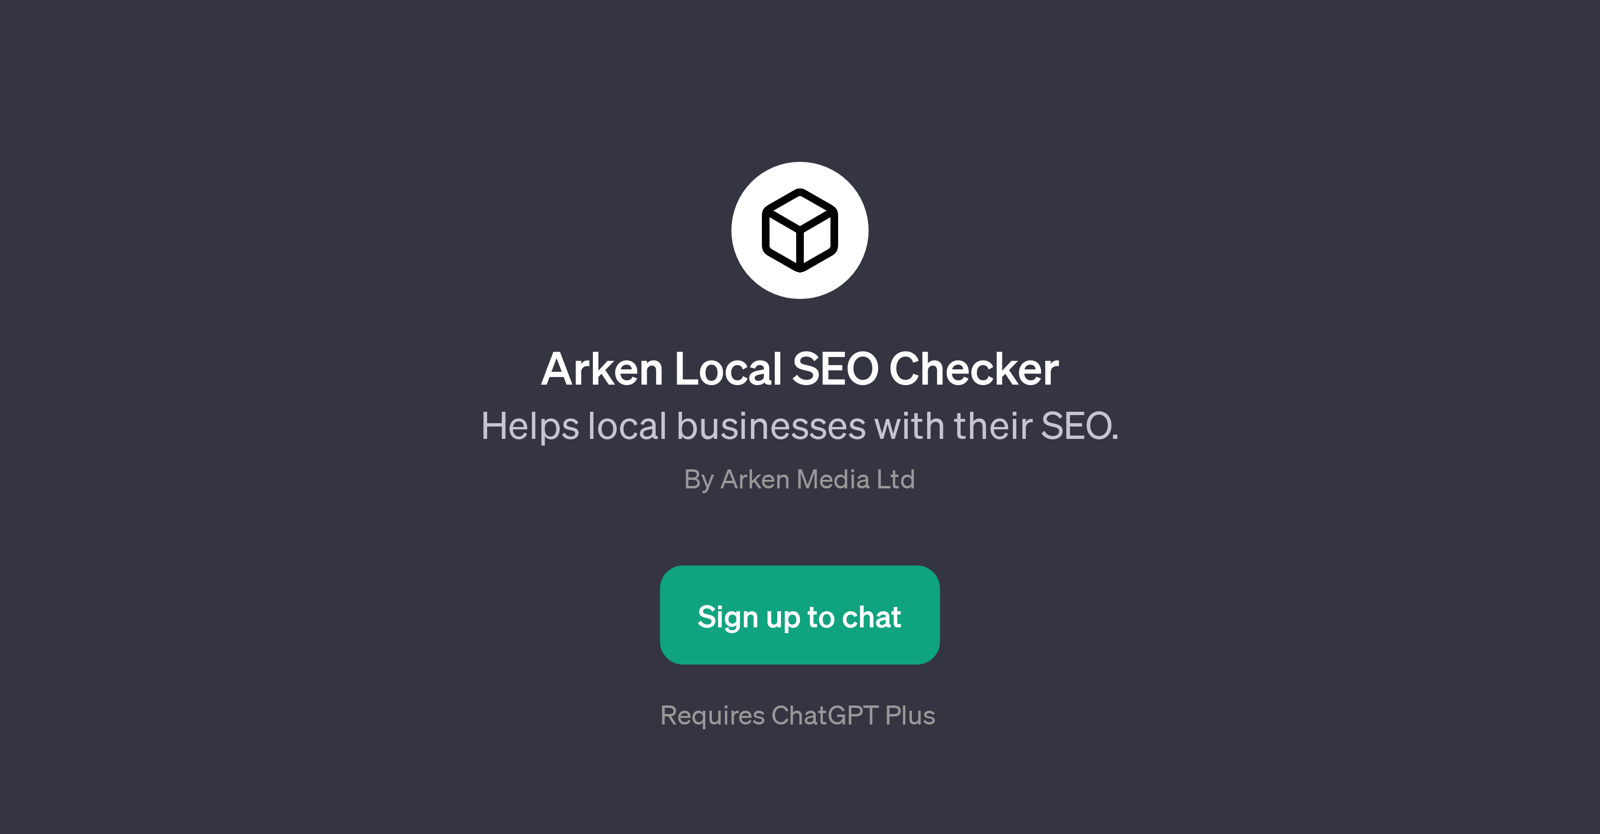 Arken Local SEO Checker website